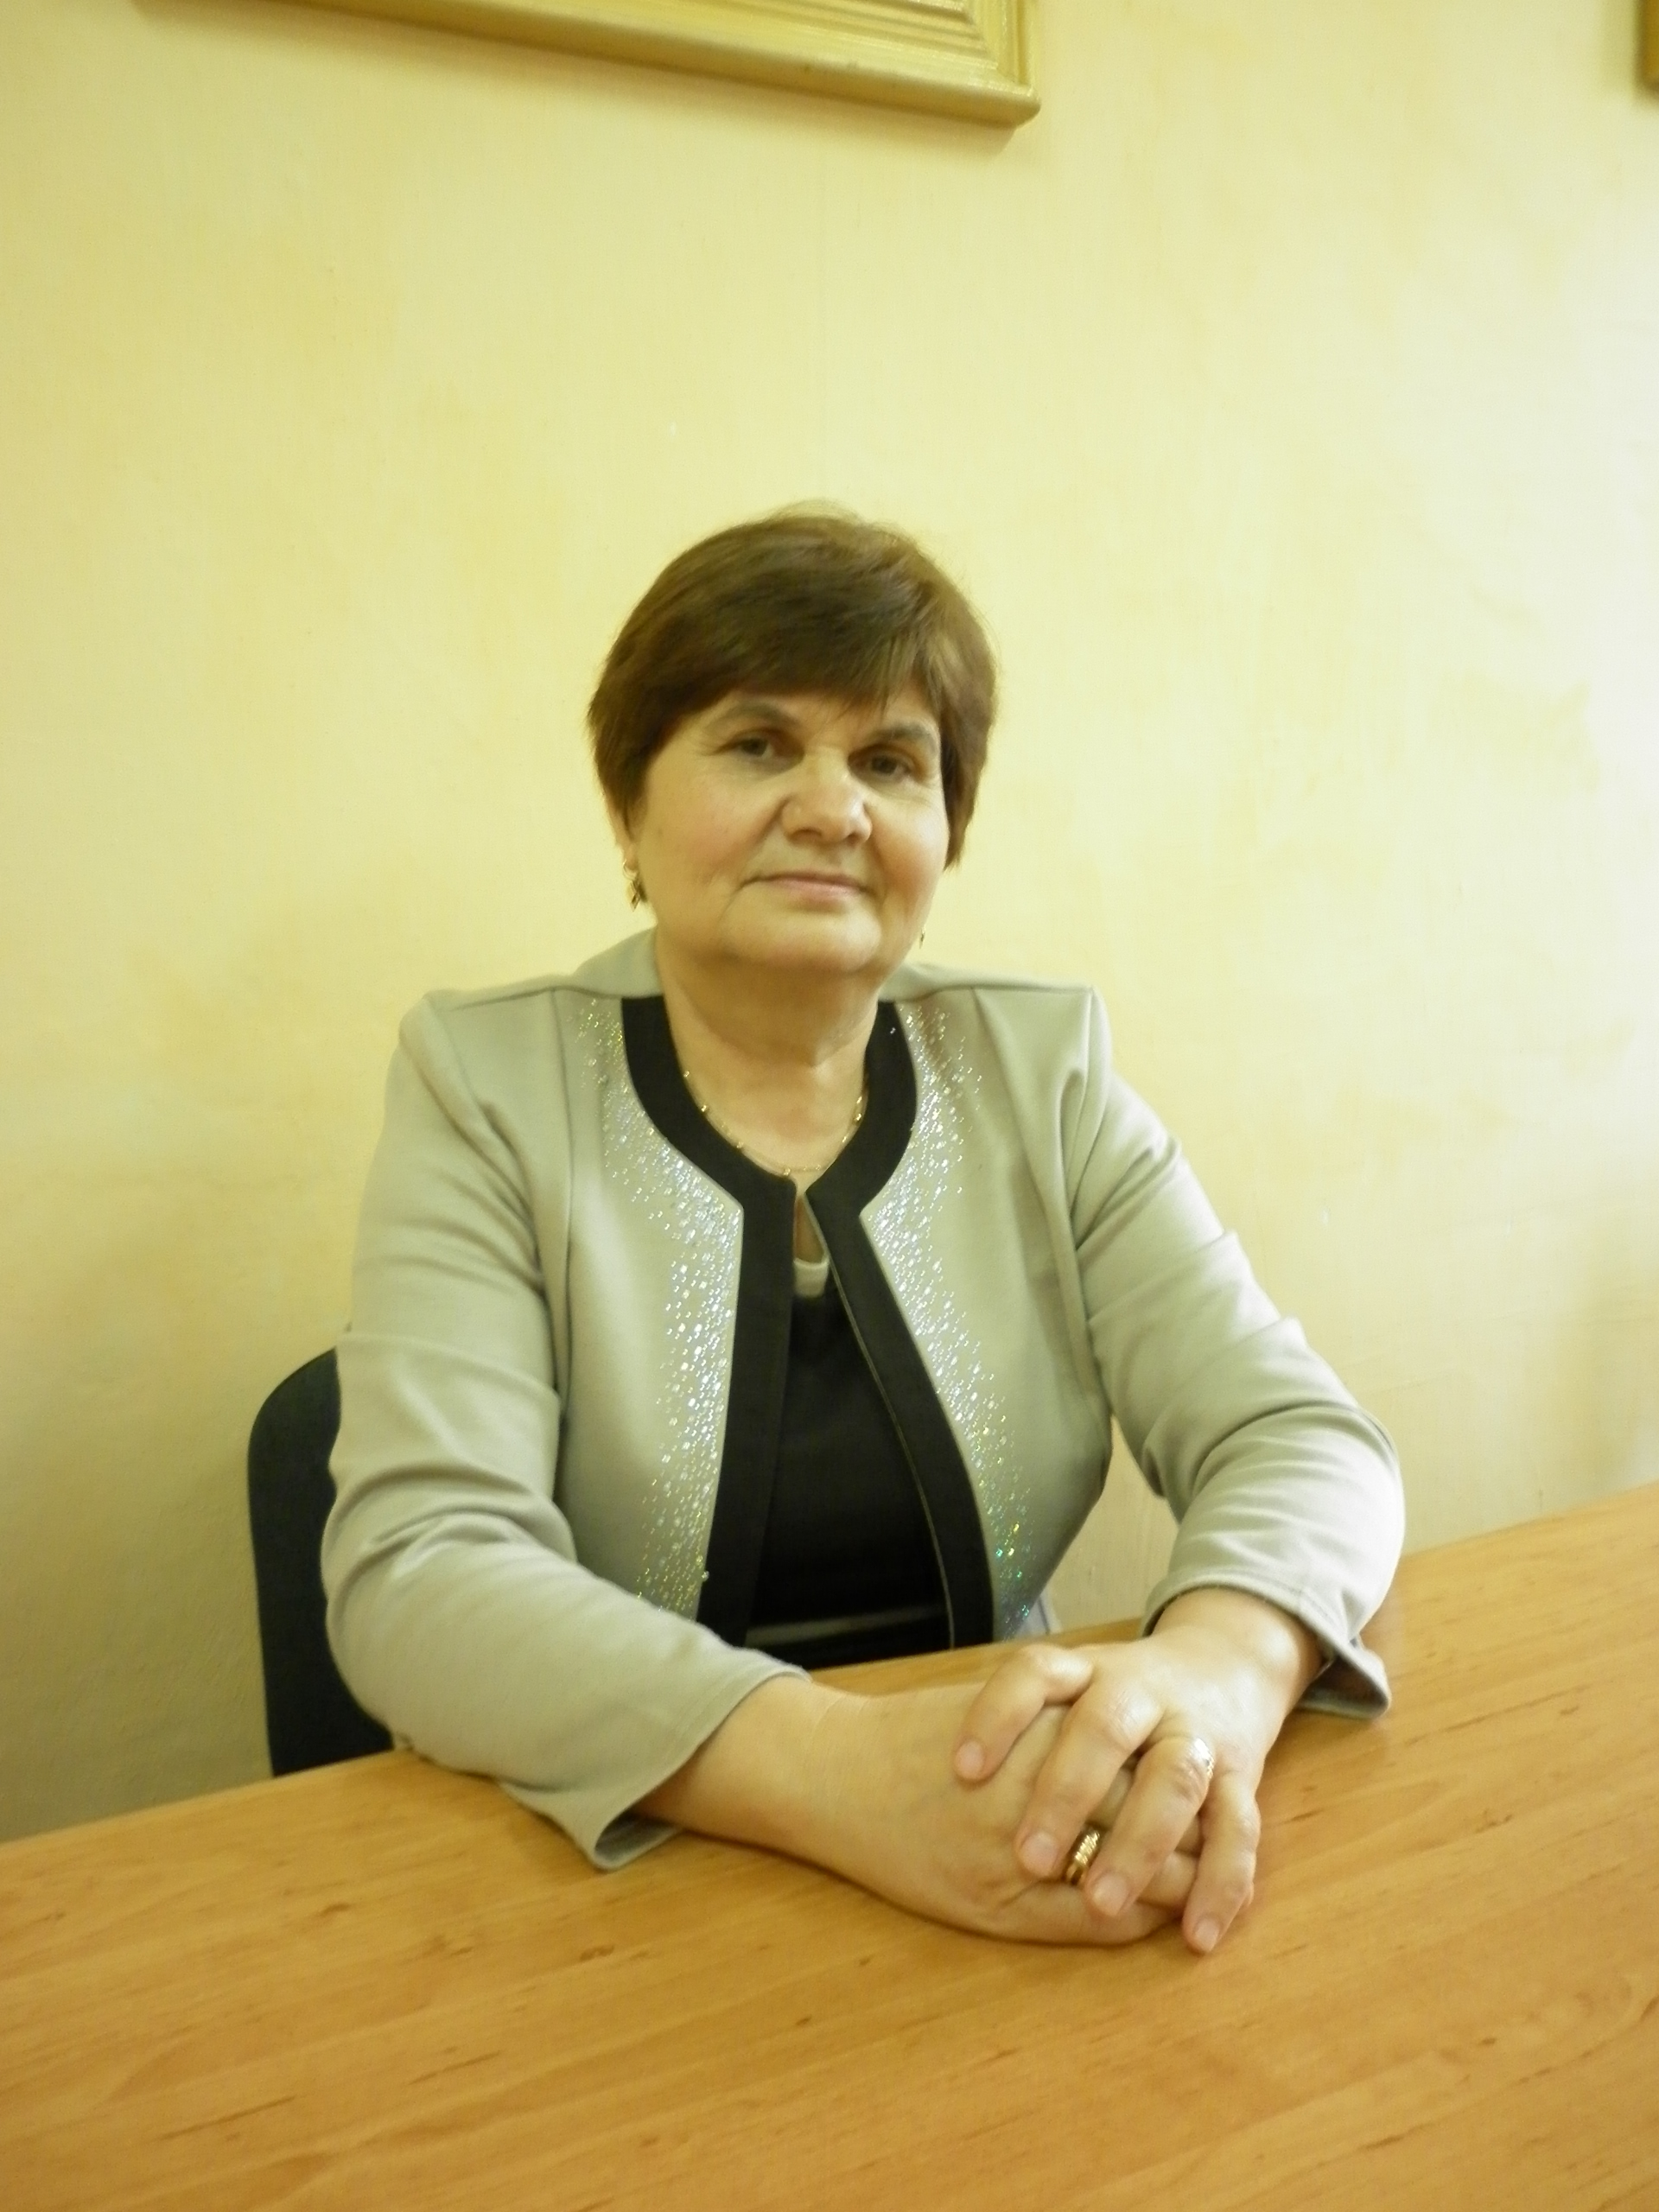 Ludmila BĂLȚATU